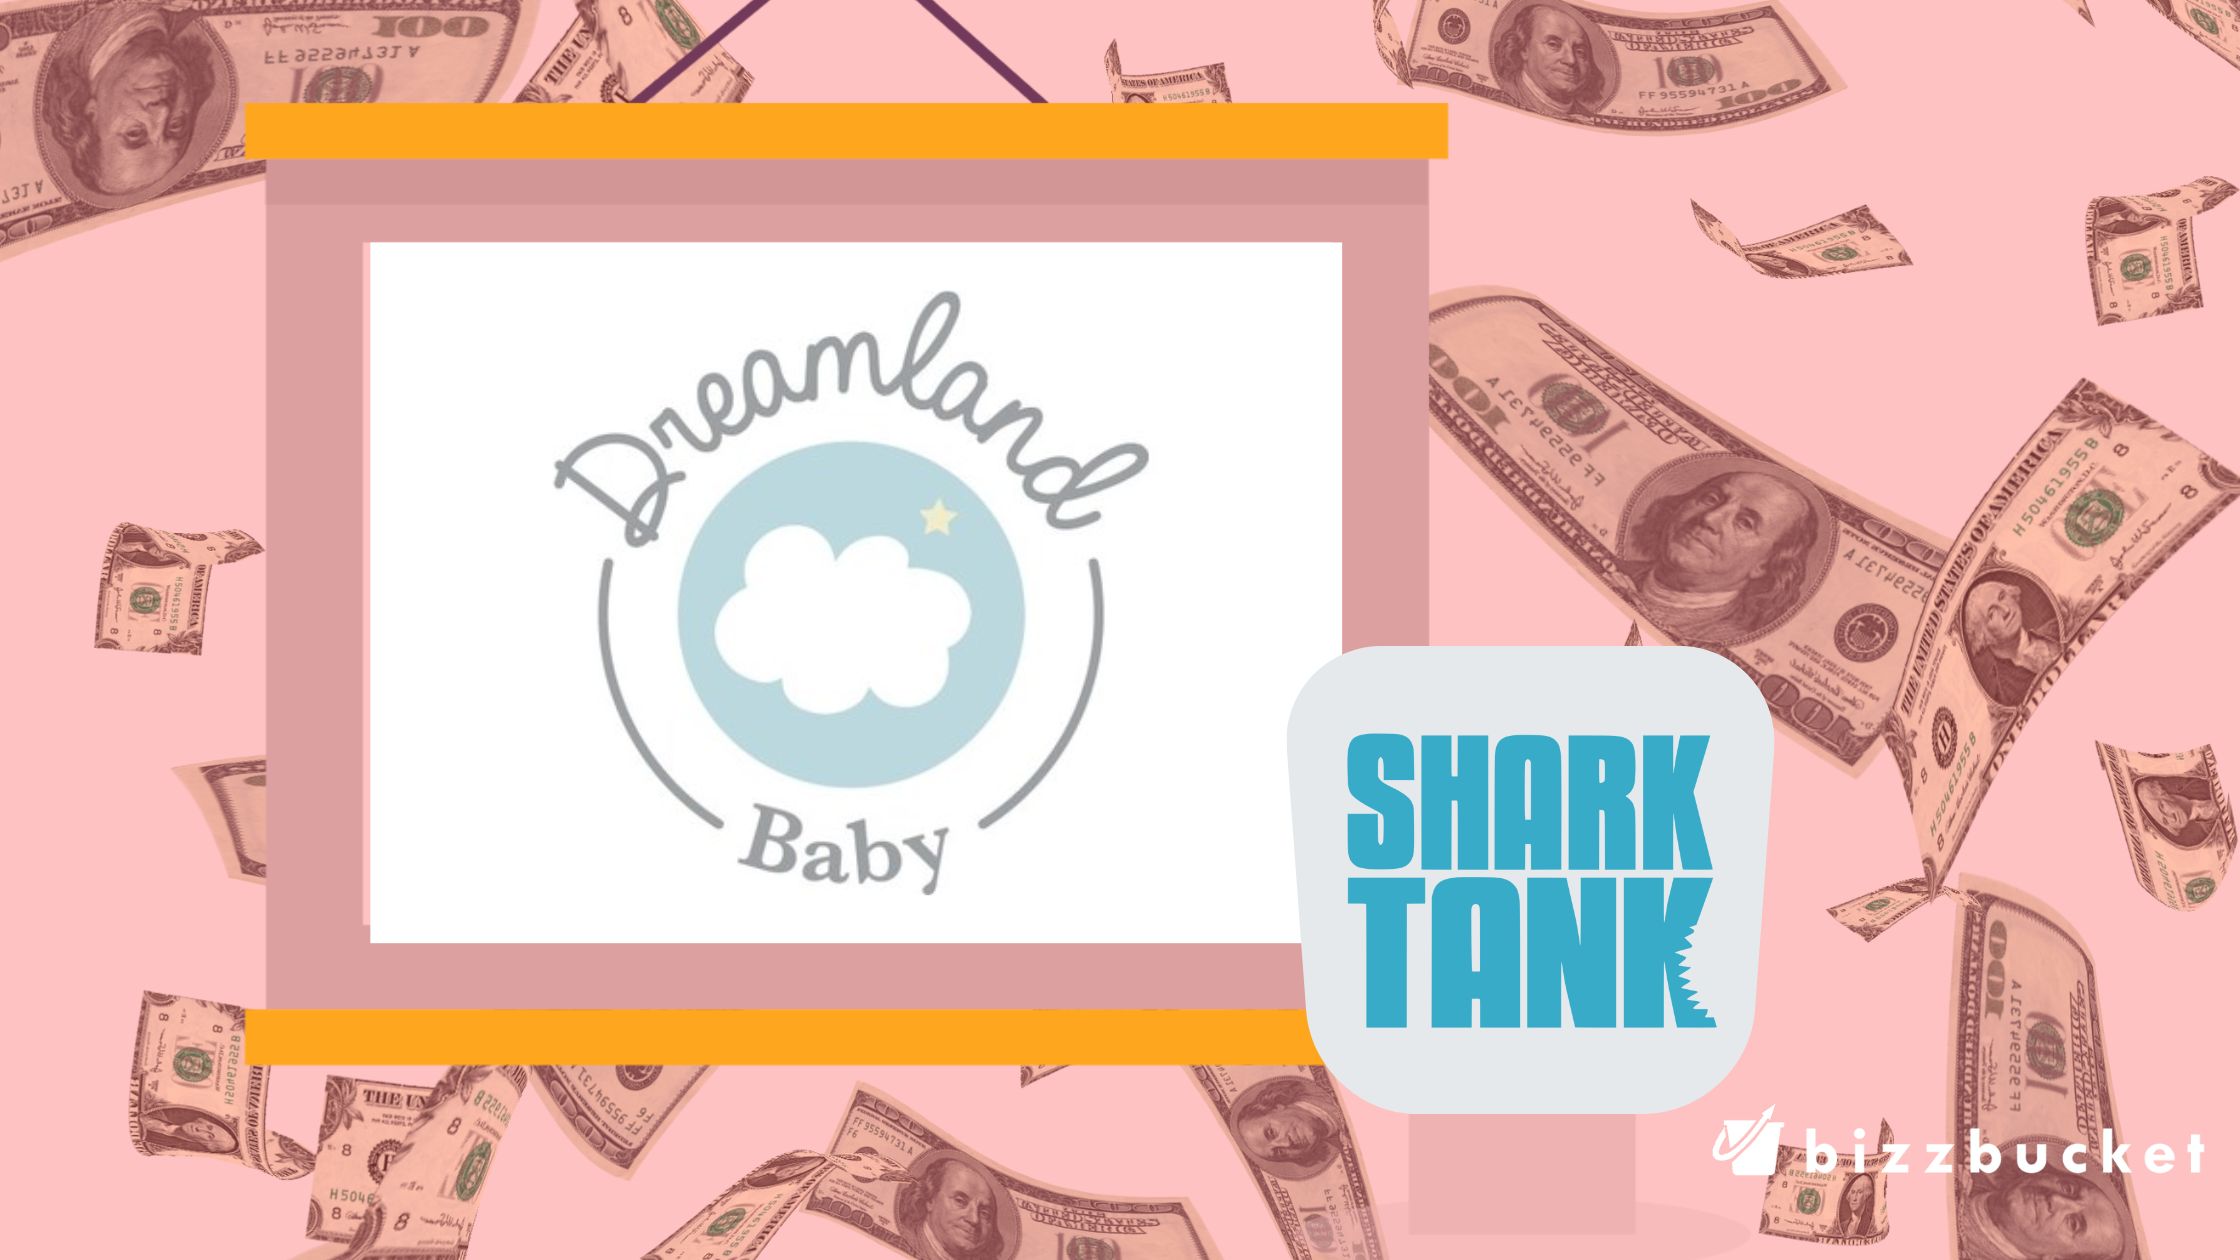 Dreamland Baby shark tank